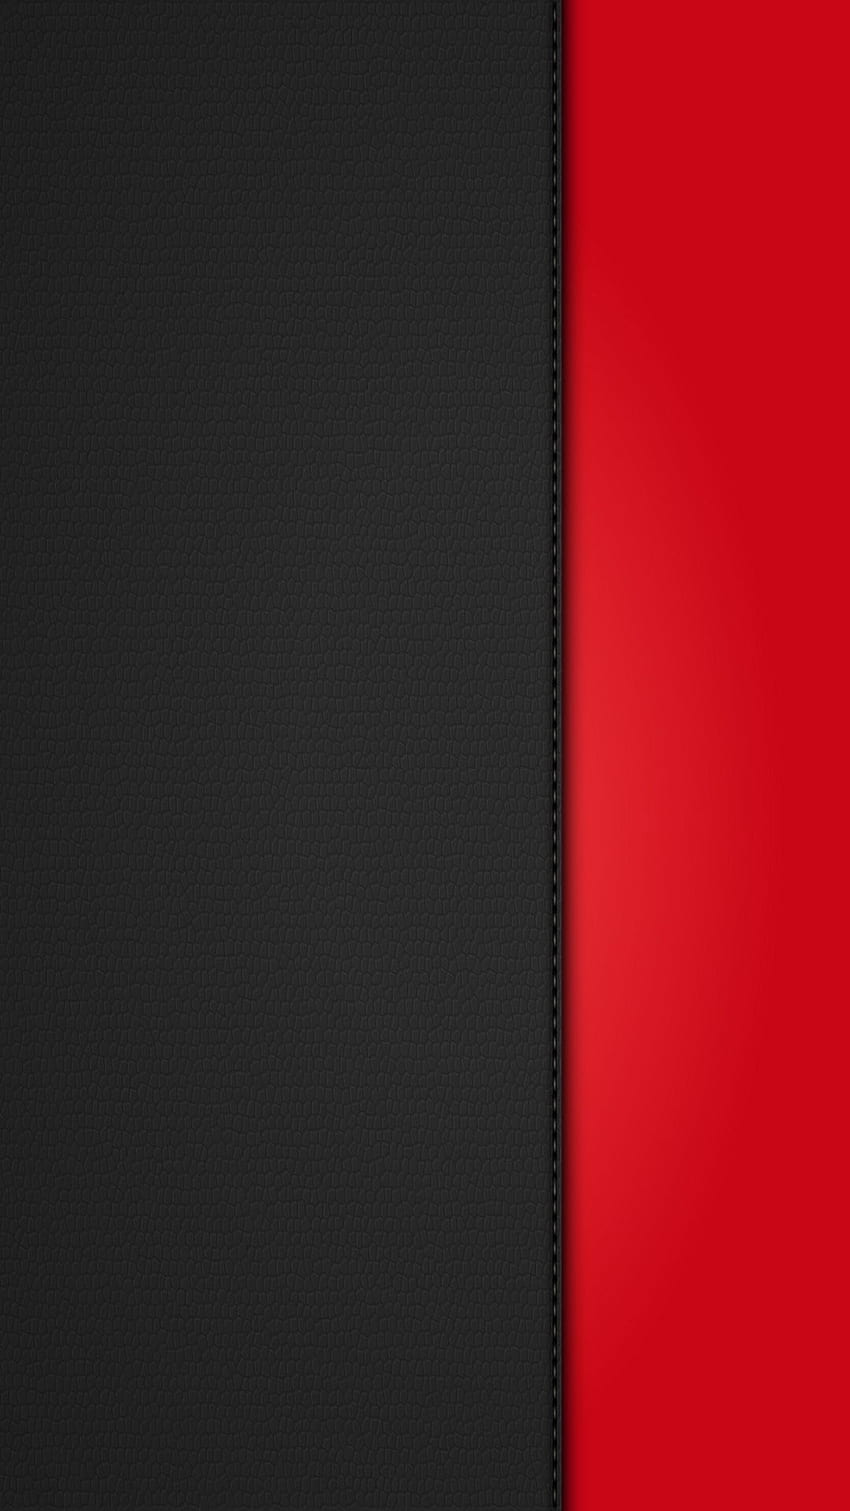 Naranja Negro Grupo Rojo iPhone 6 Plus - Mitad Negro y Rojo, Mitad Pareja fondo de pantalla del teléfono